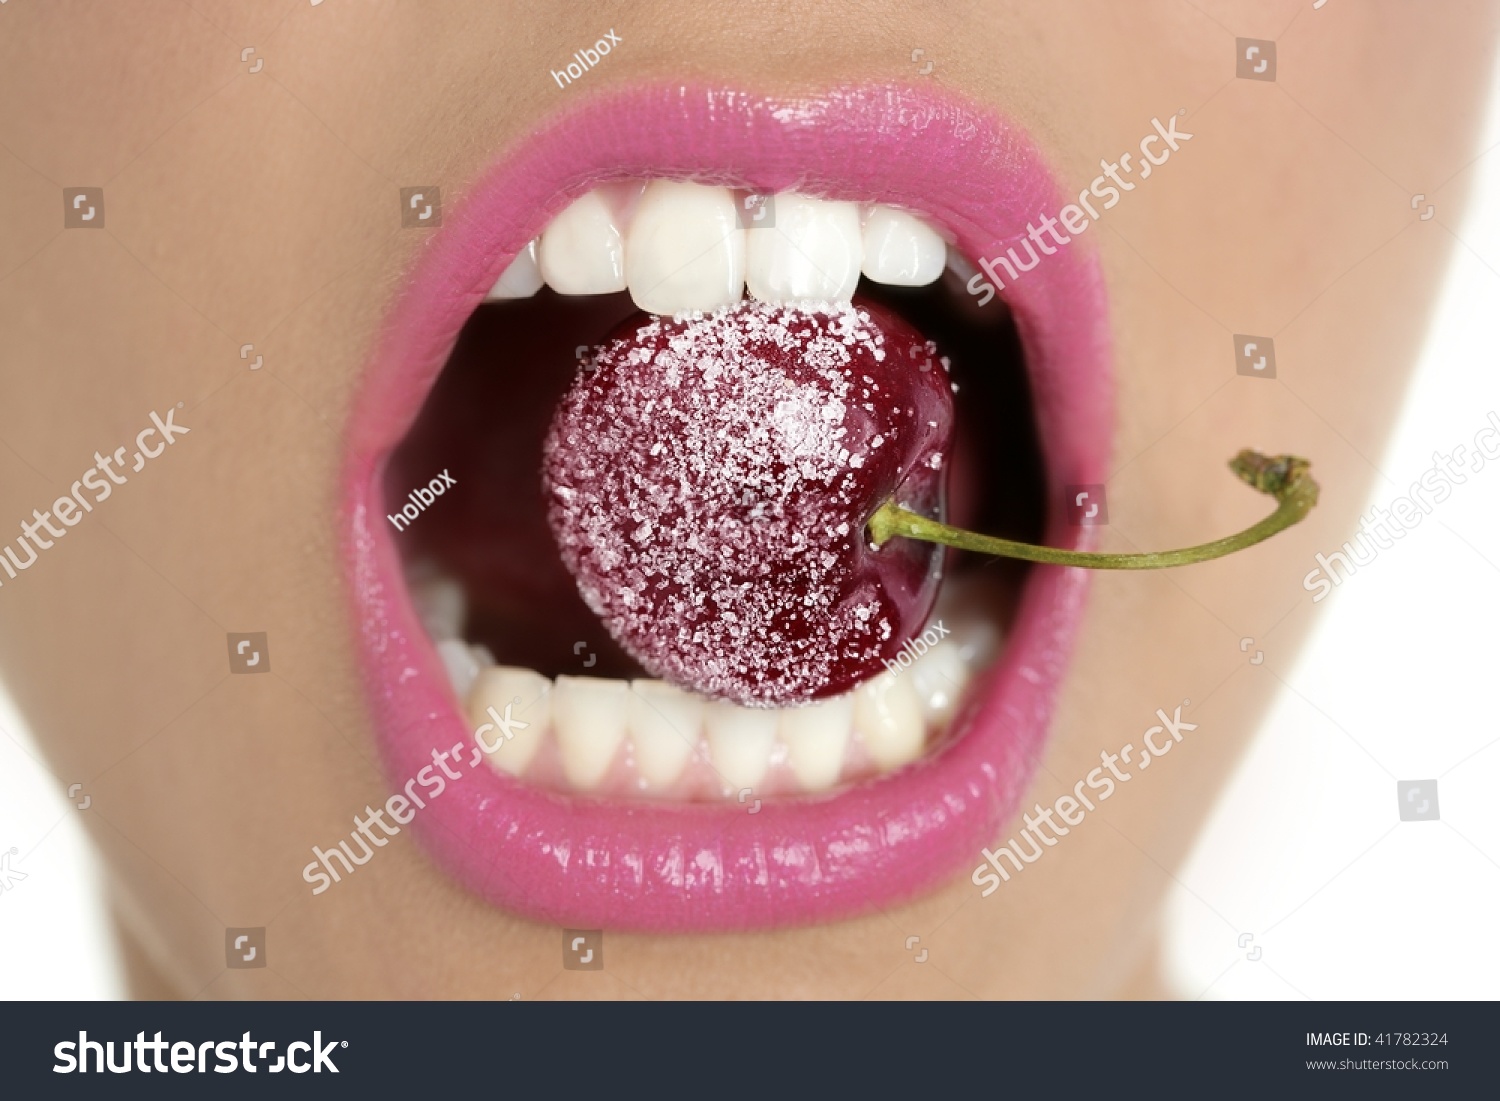 Teeth biting fetish free porn images